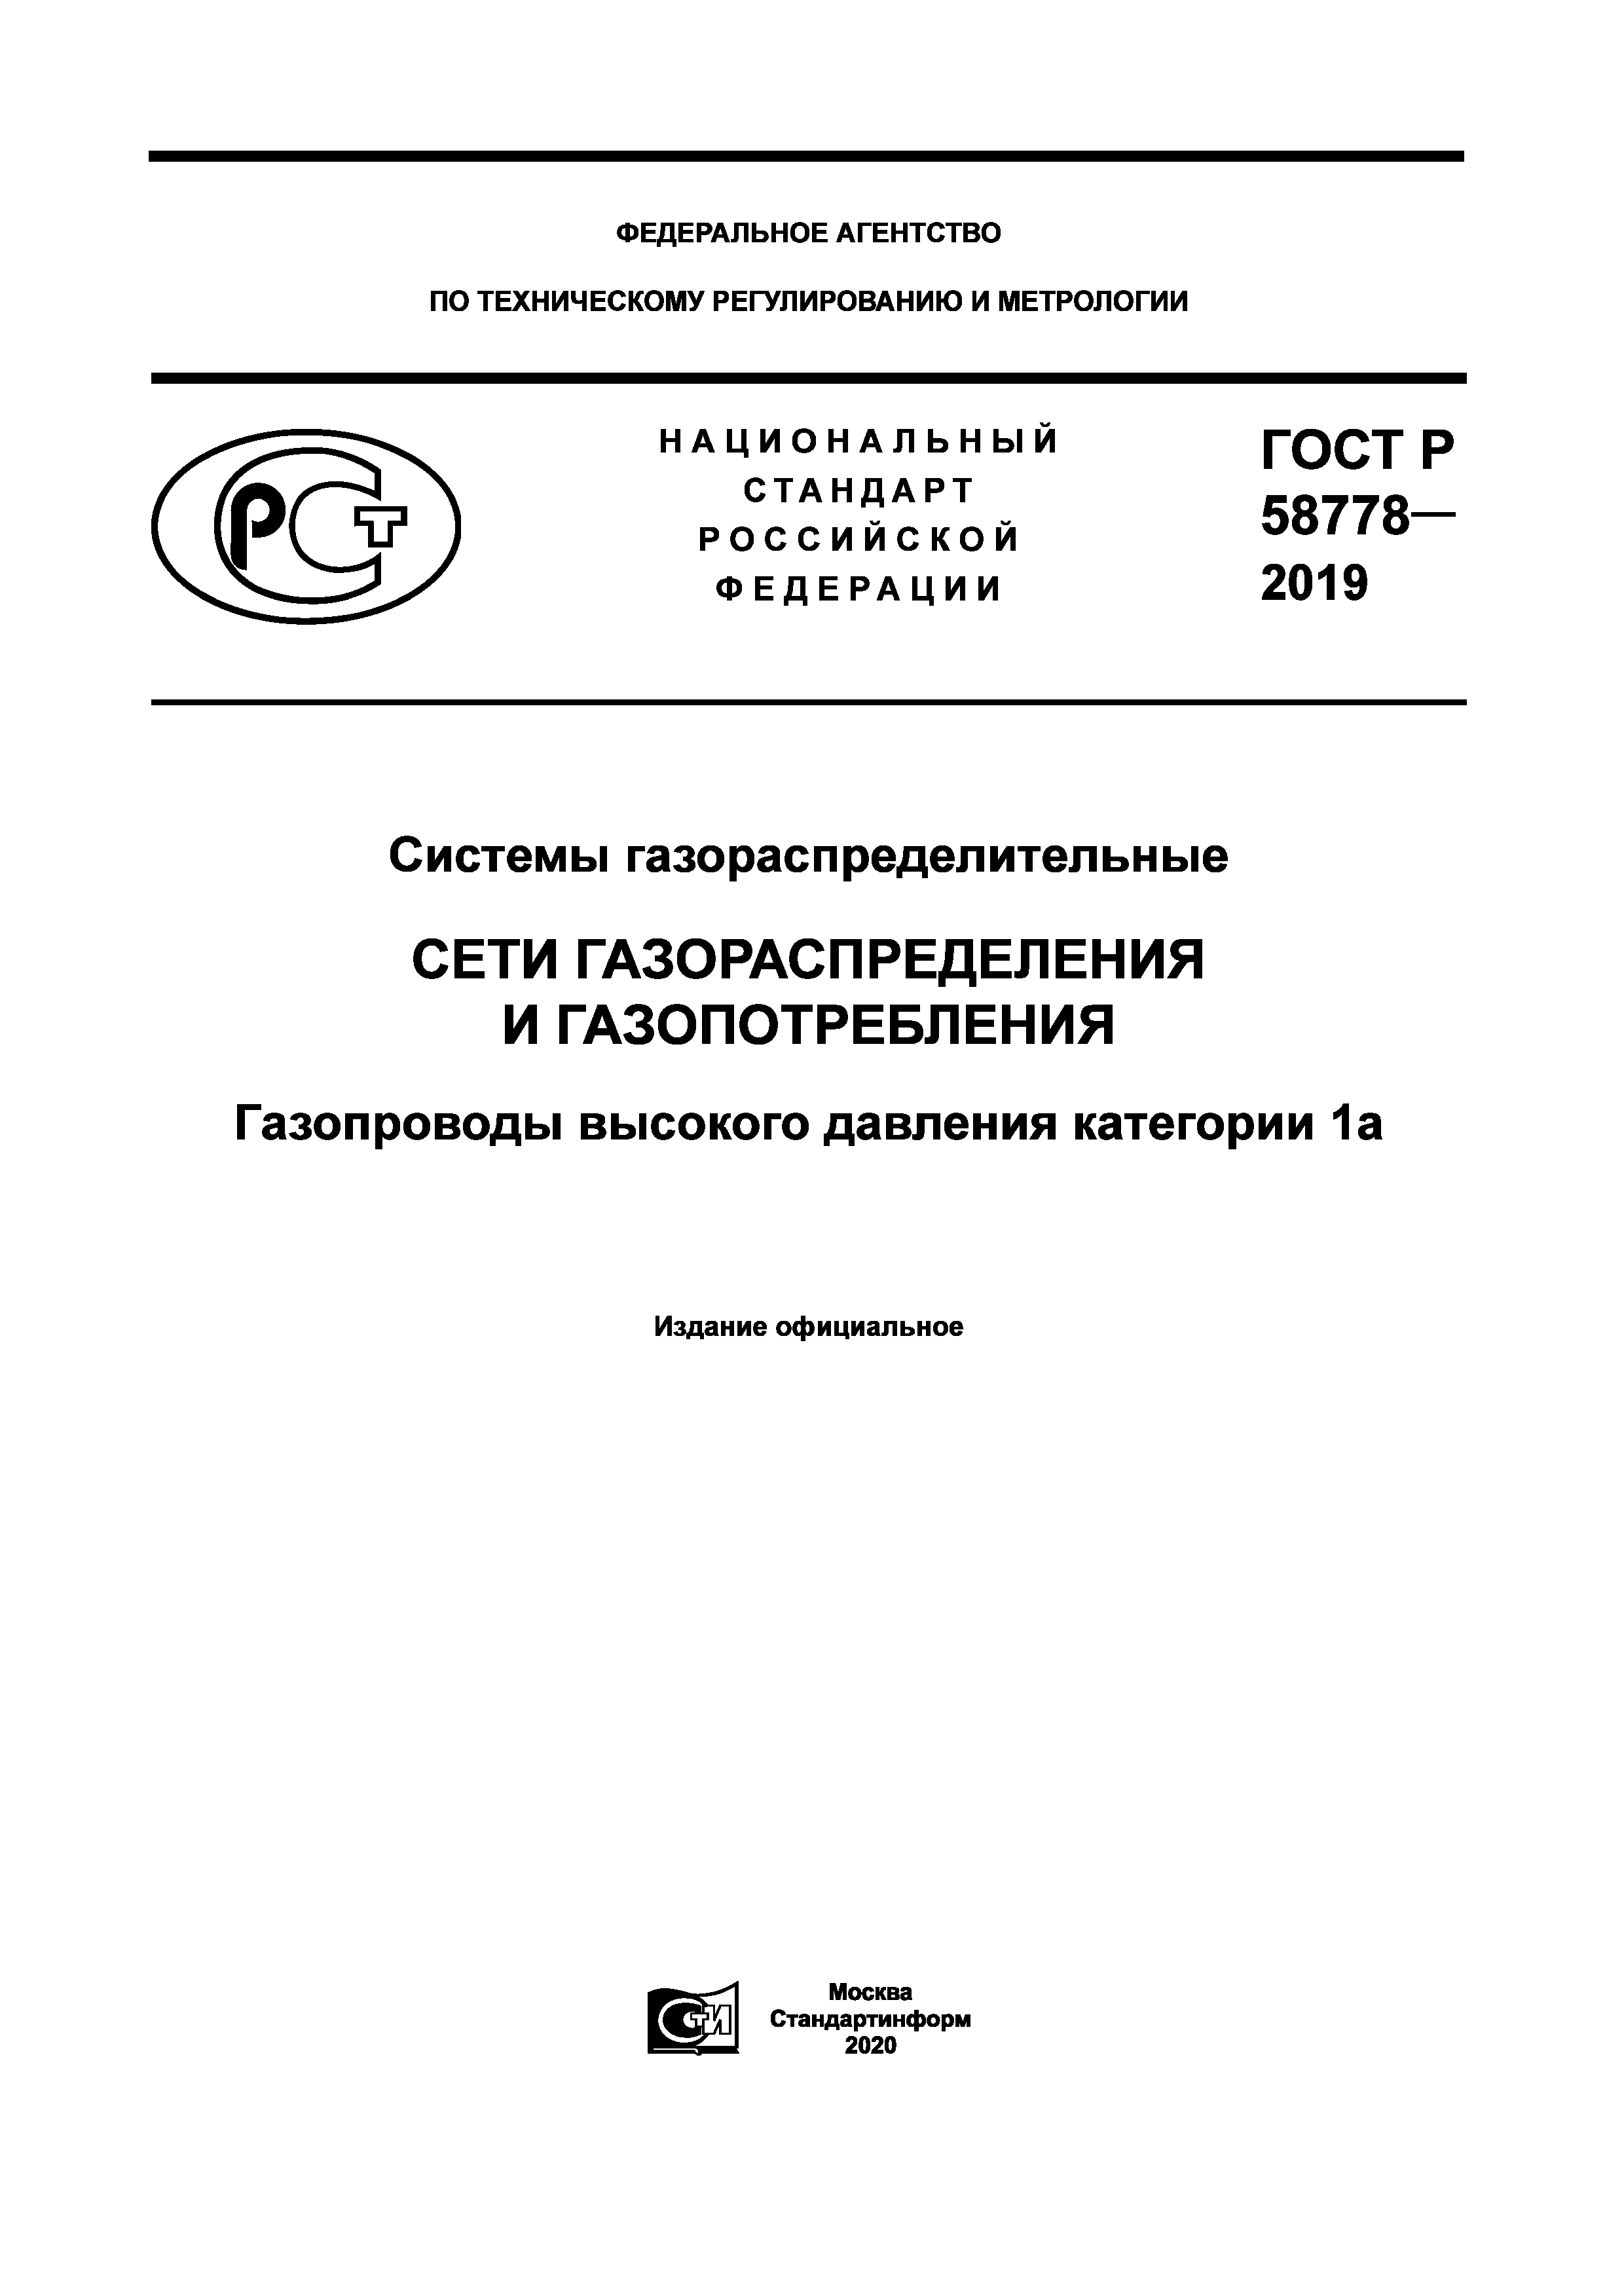 ГОСТ Р 58778-2019